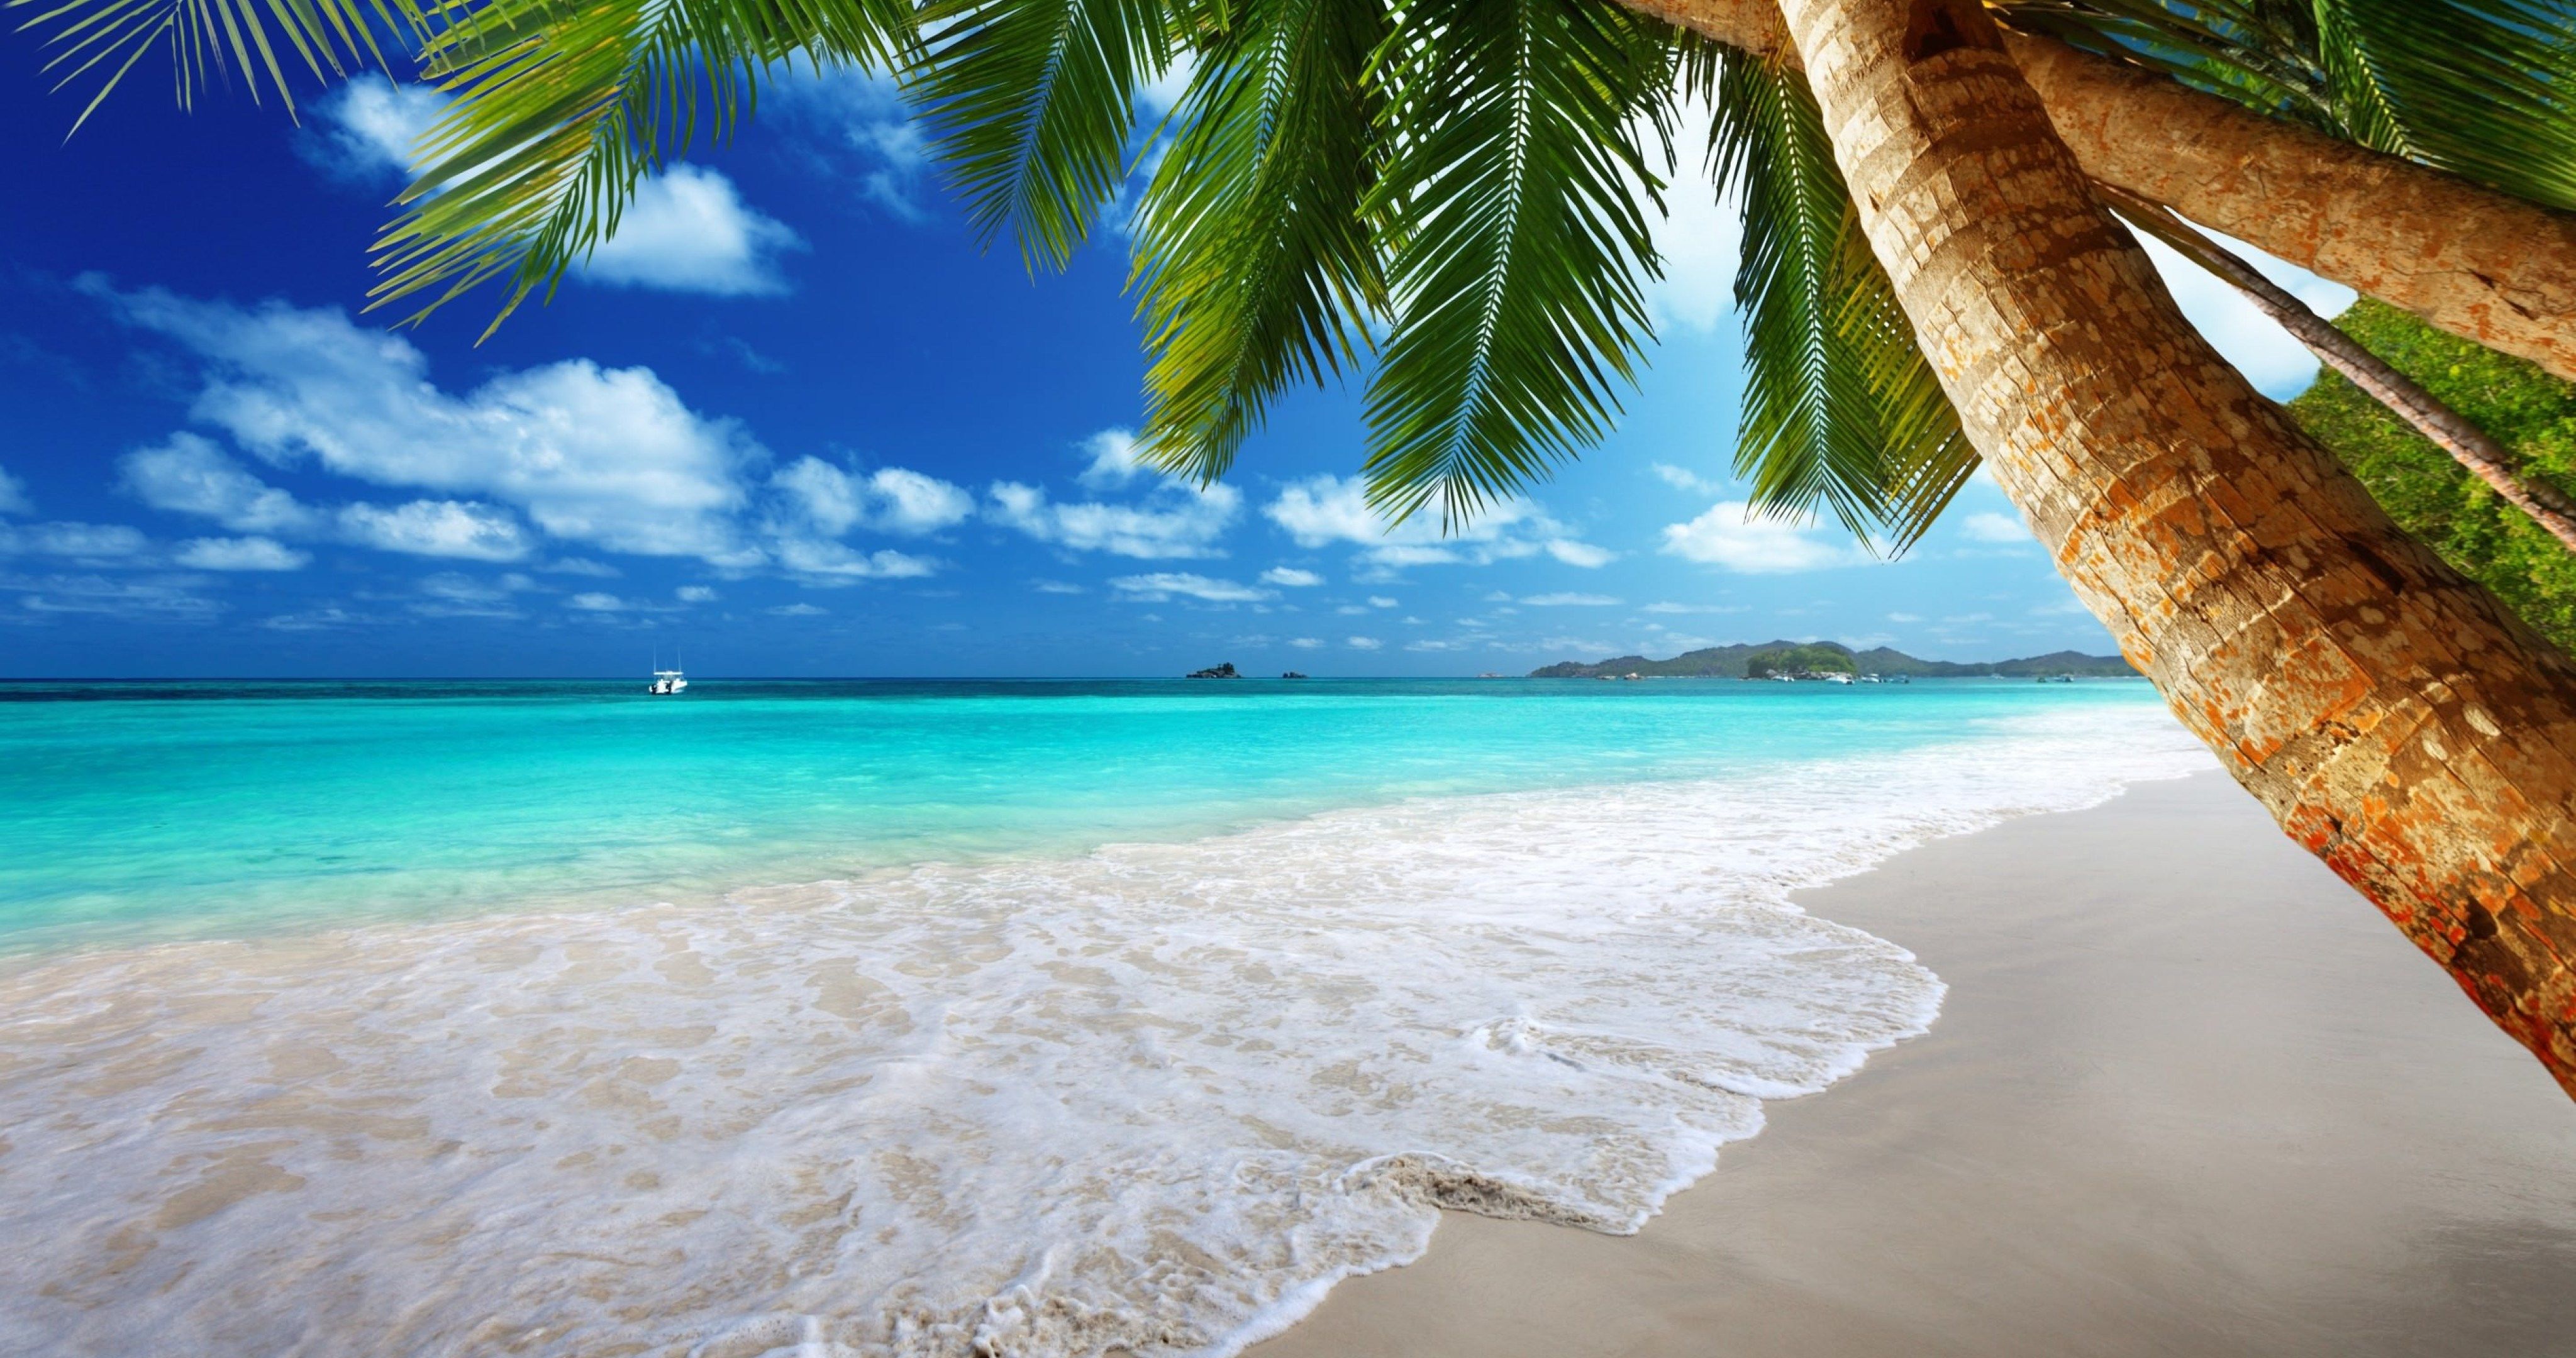 tropical paradise on beach 4k ultra HD wallpaper High quality walls